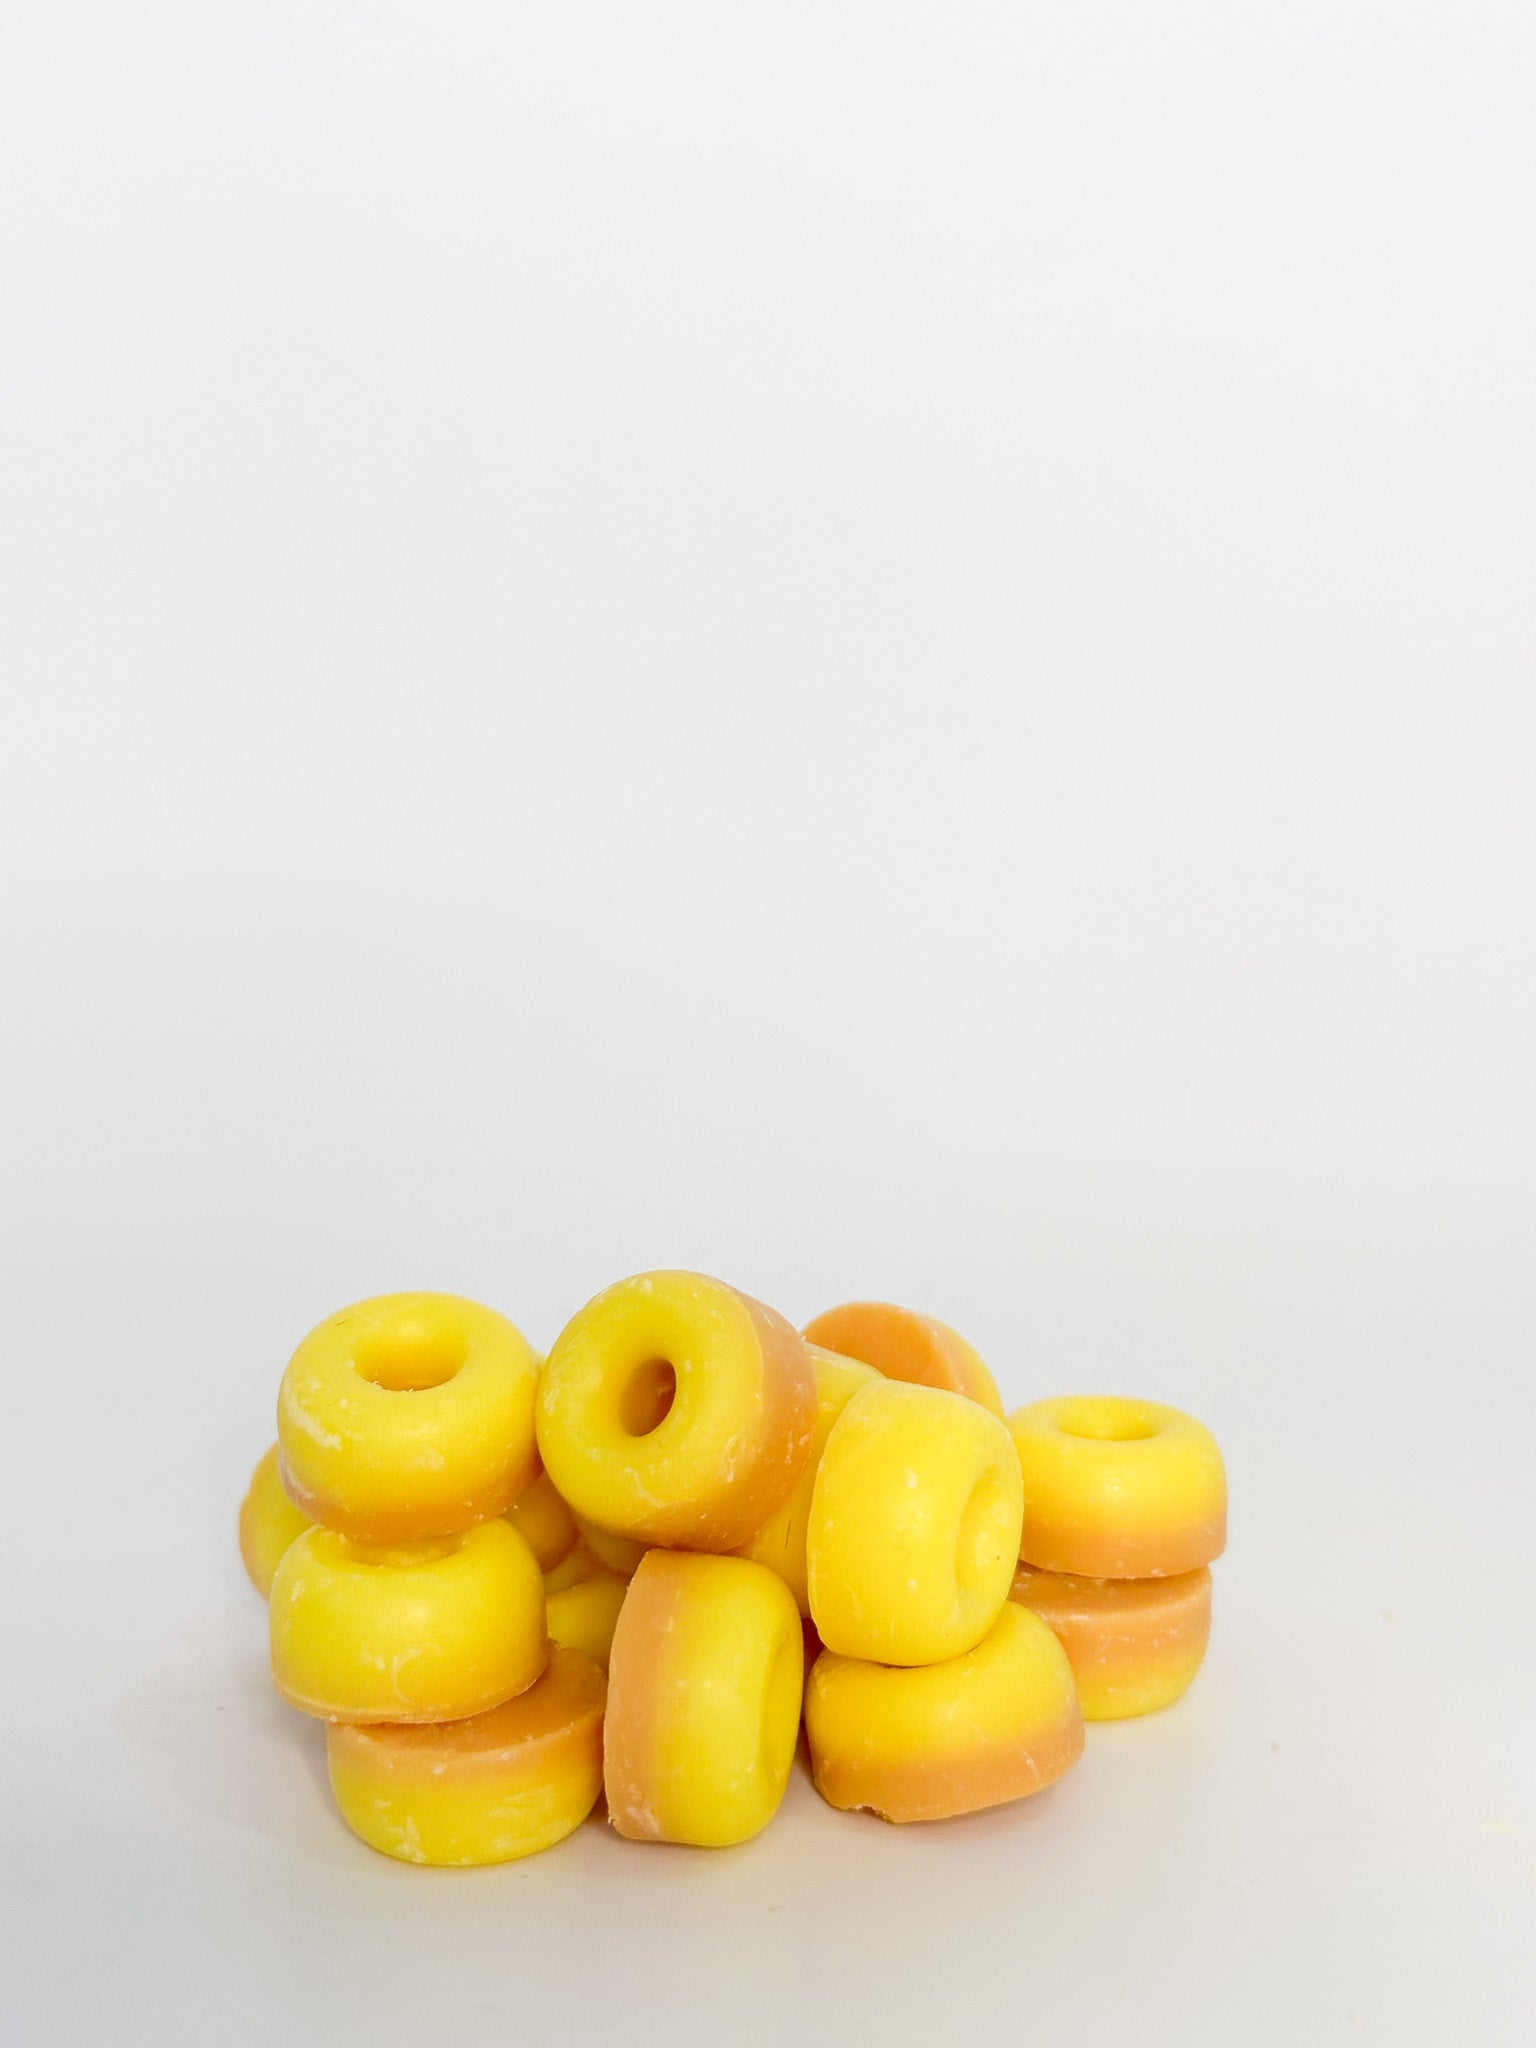 Dessert Series: Large Wax Melt Donut Tarts